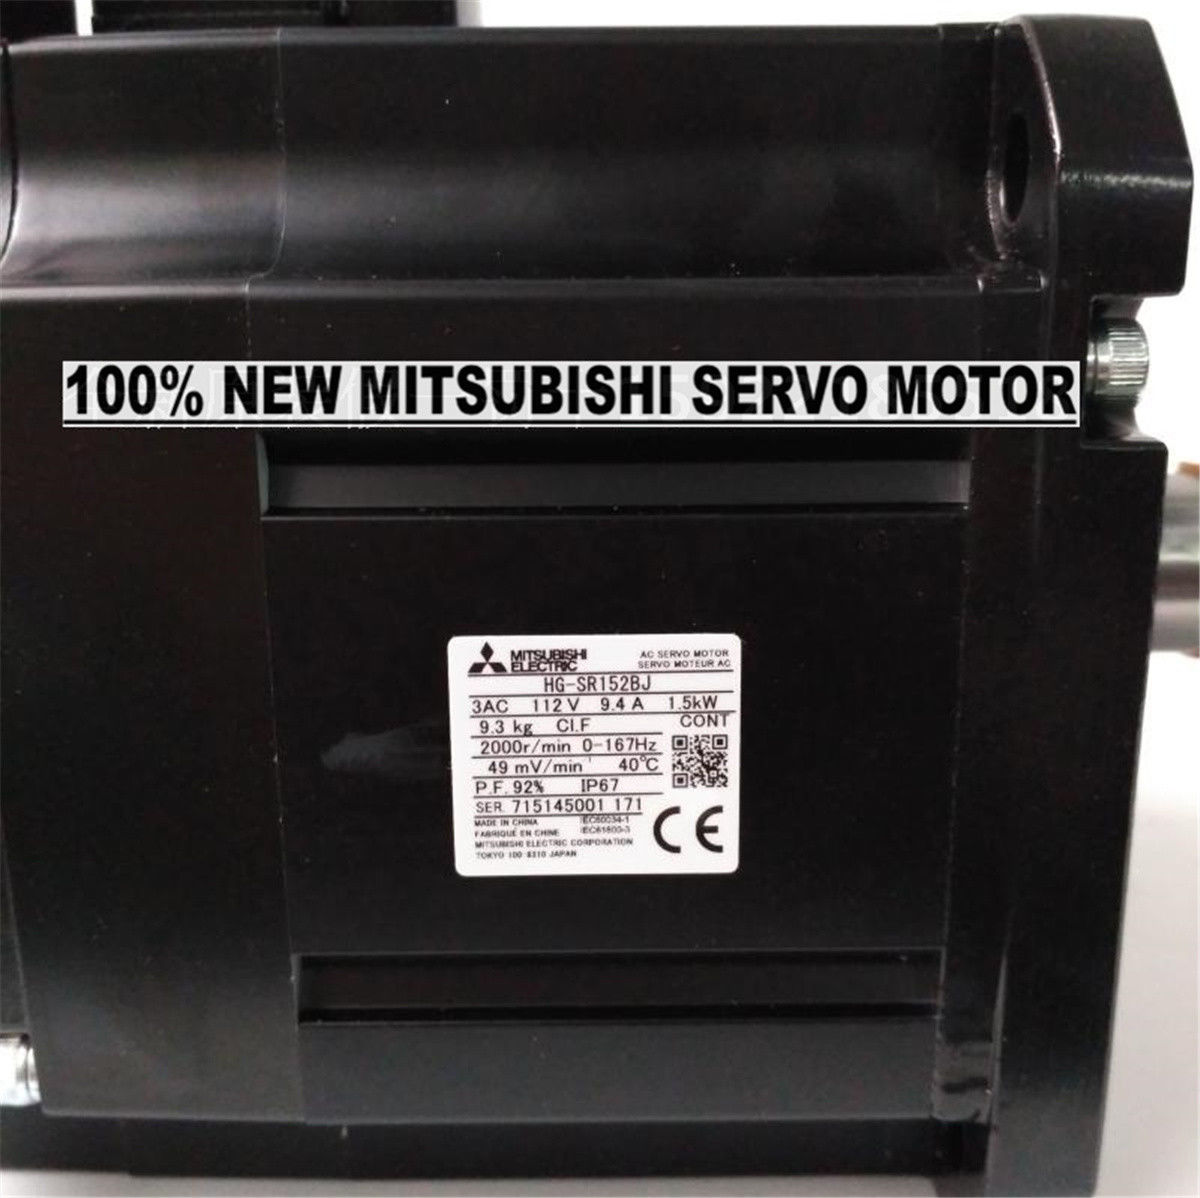 NEW Mitsubishi Servo Motor HG-SR152BJ in box HGSR152BJ - Click Image to Close